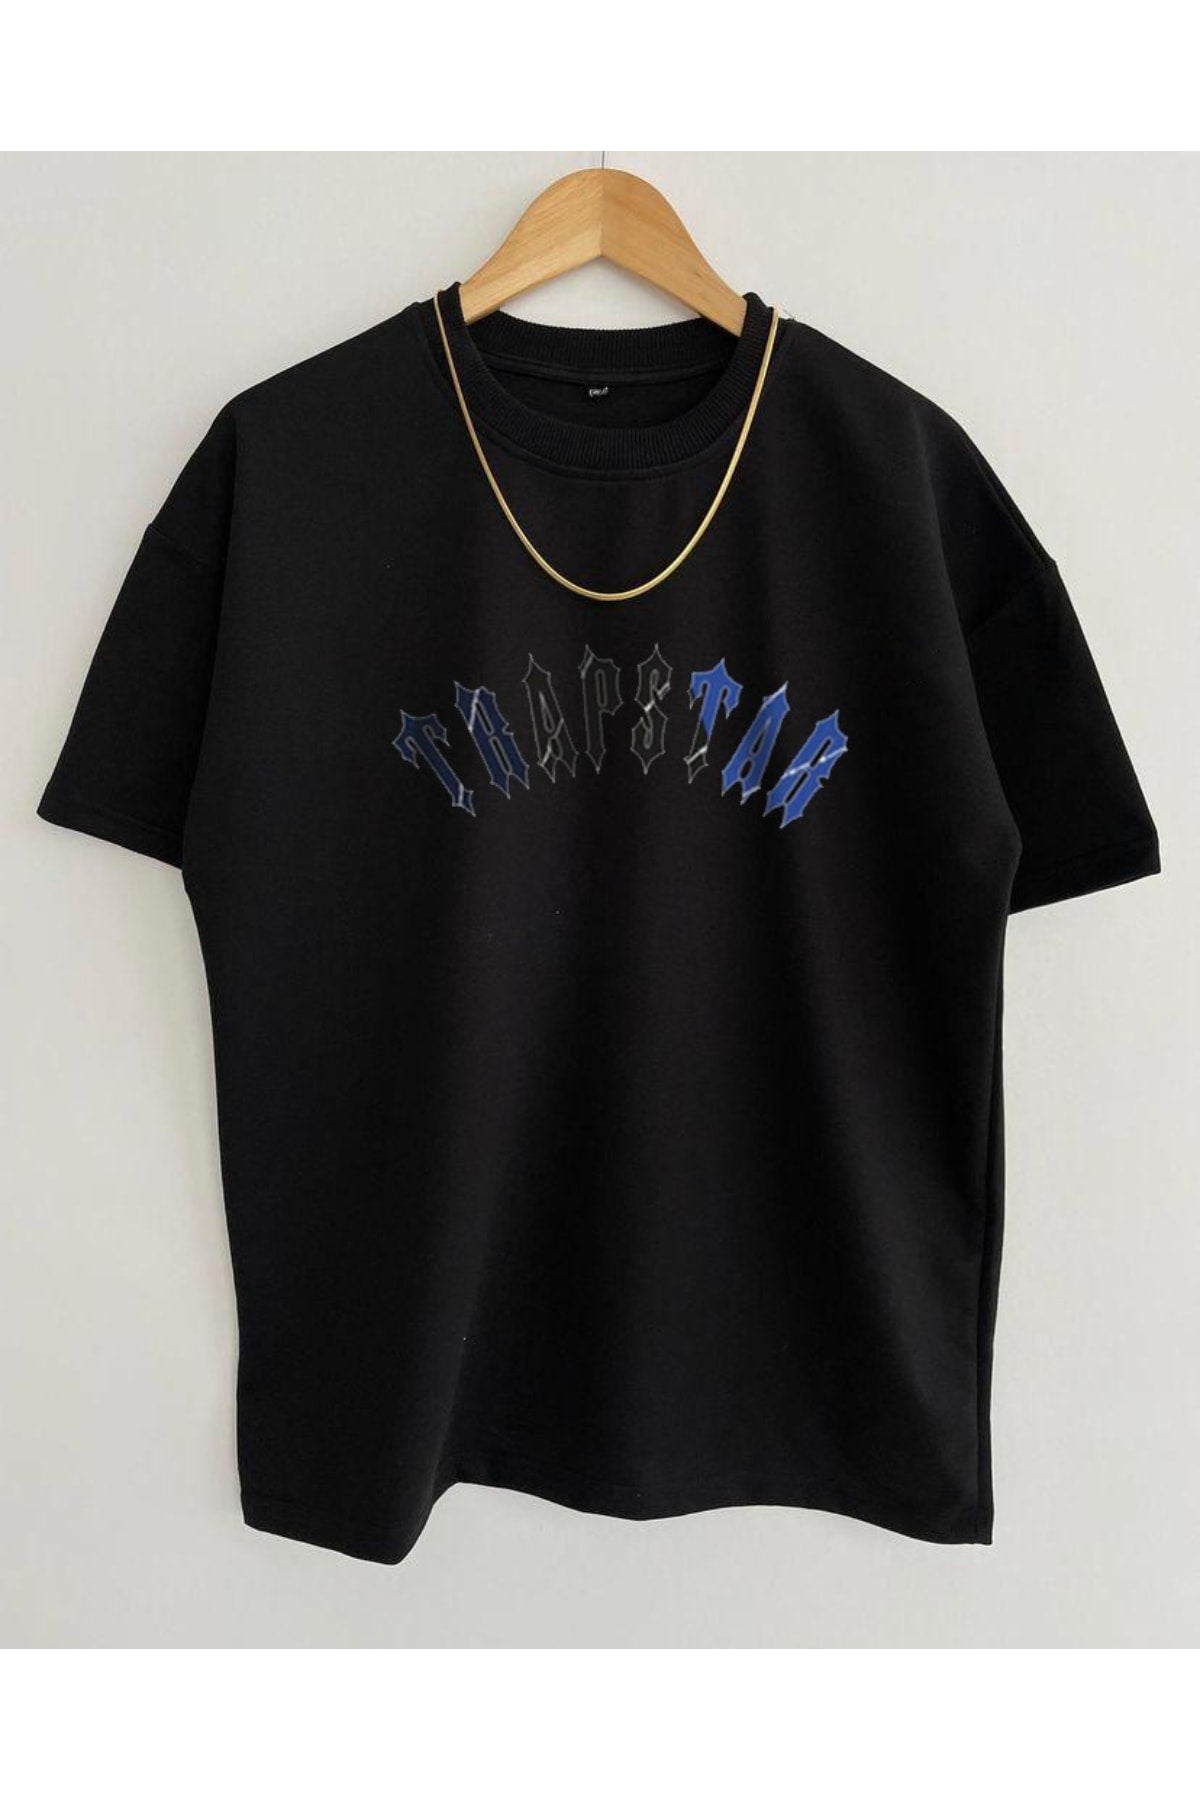 Unisex Black Trapstar Printed Oversize Crew Neck Short Sleeve Cotton T-shirt